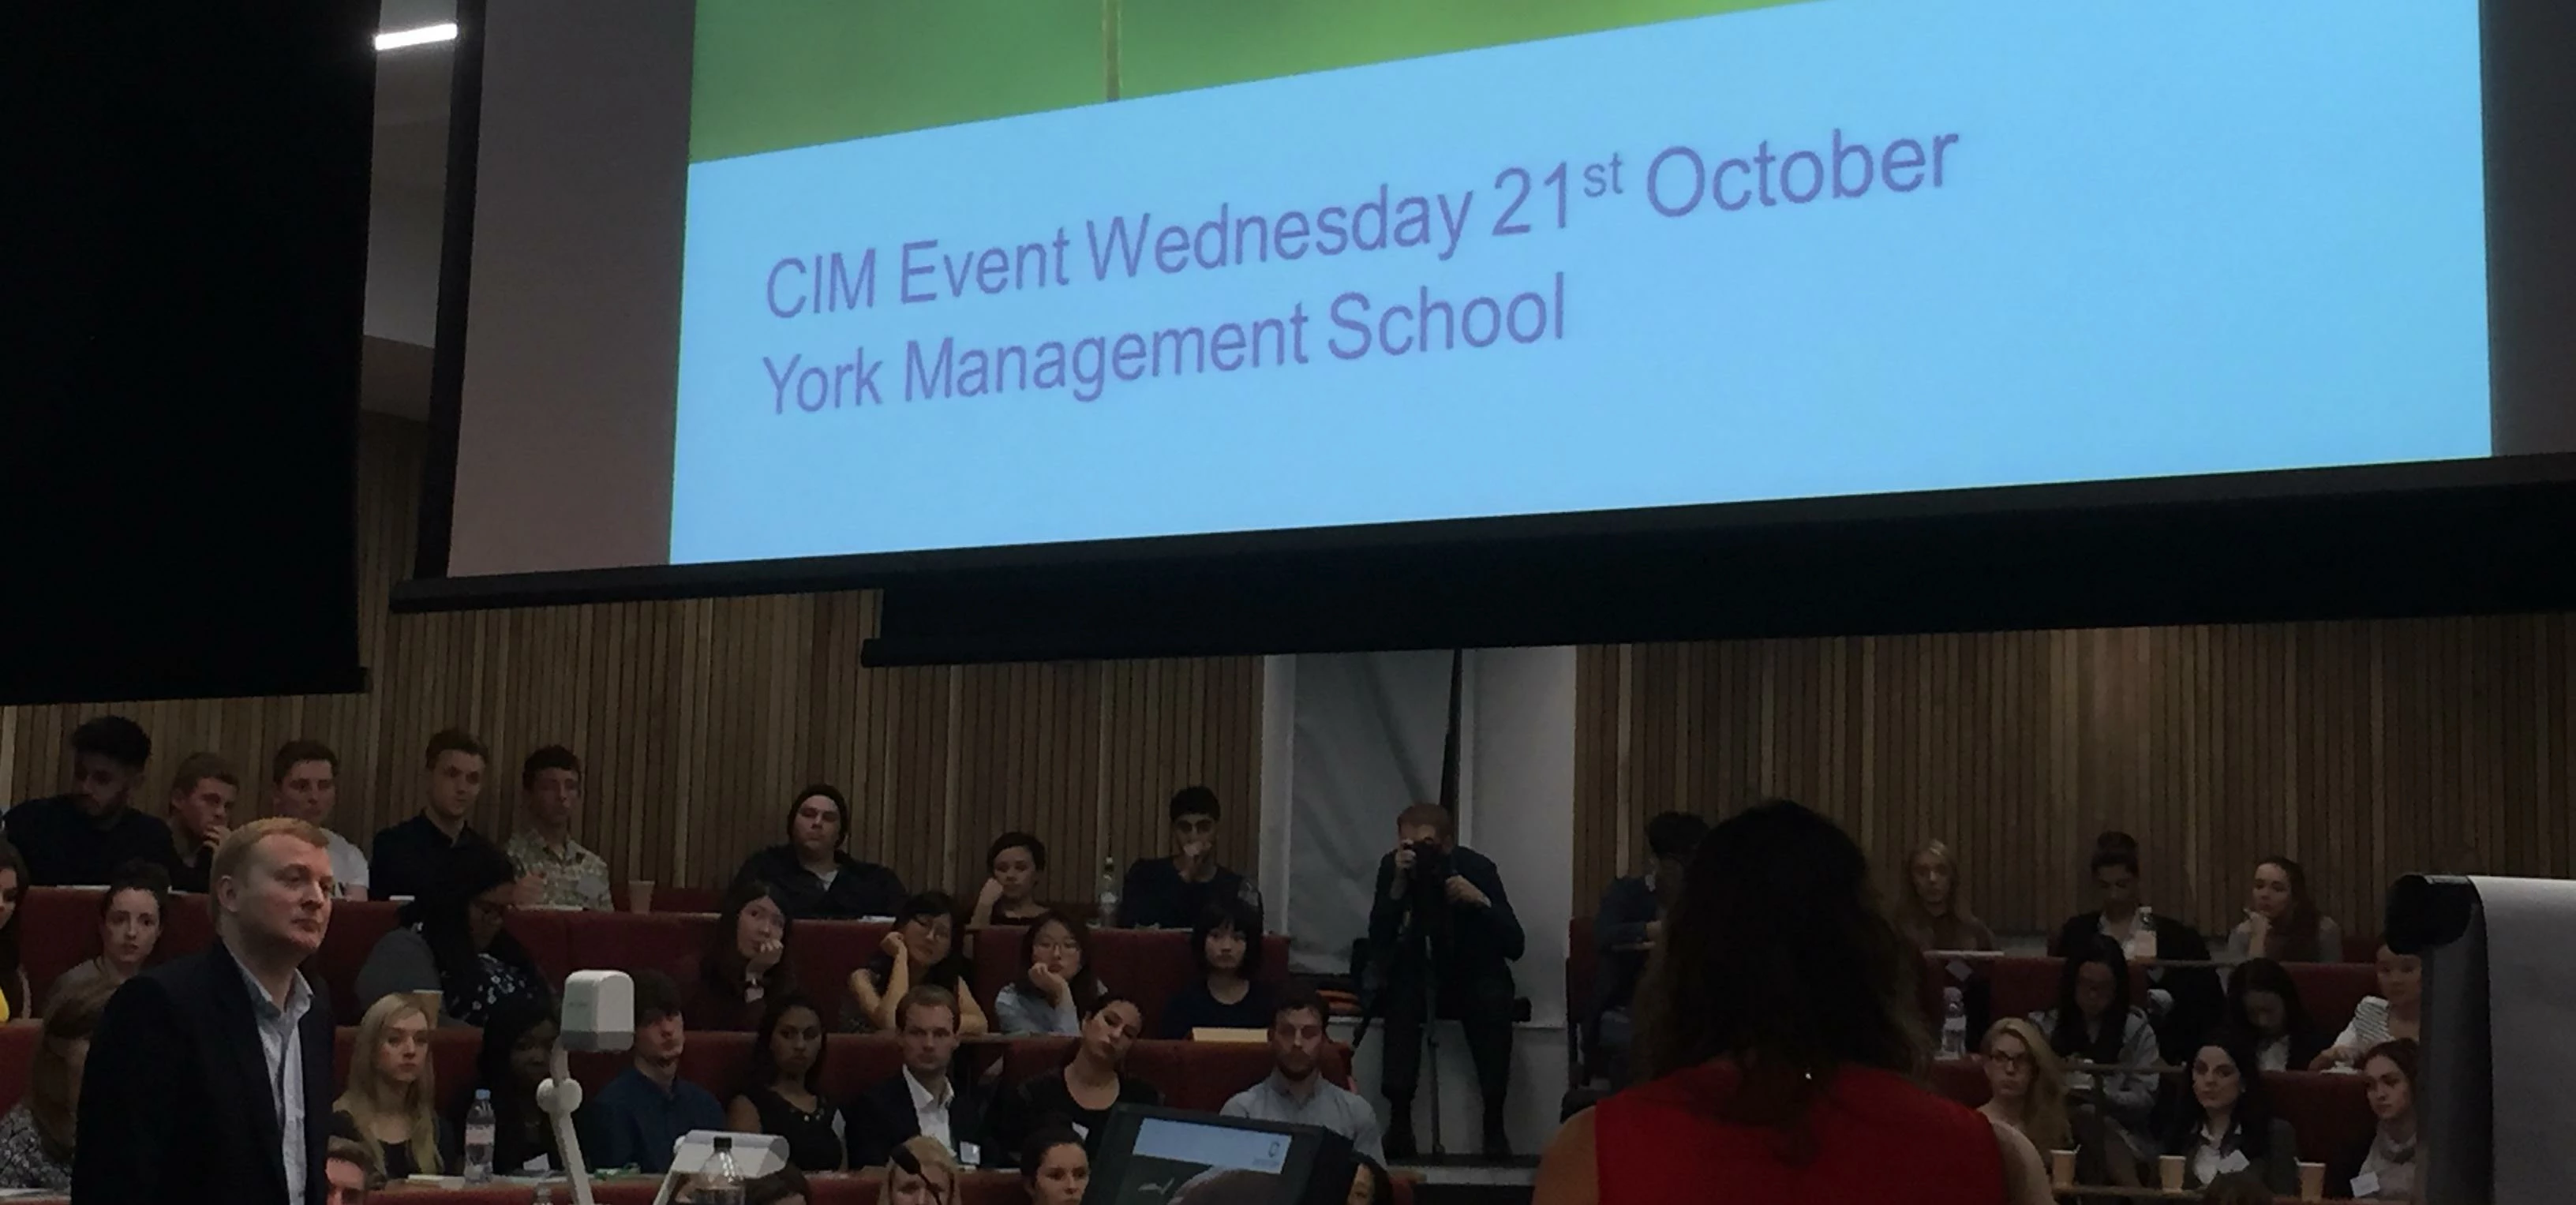 Elevation Recruitment and CIM Marketing Career Event at York Management School 